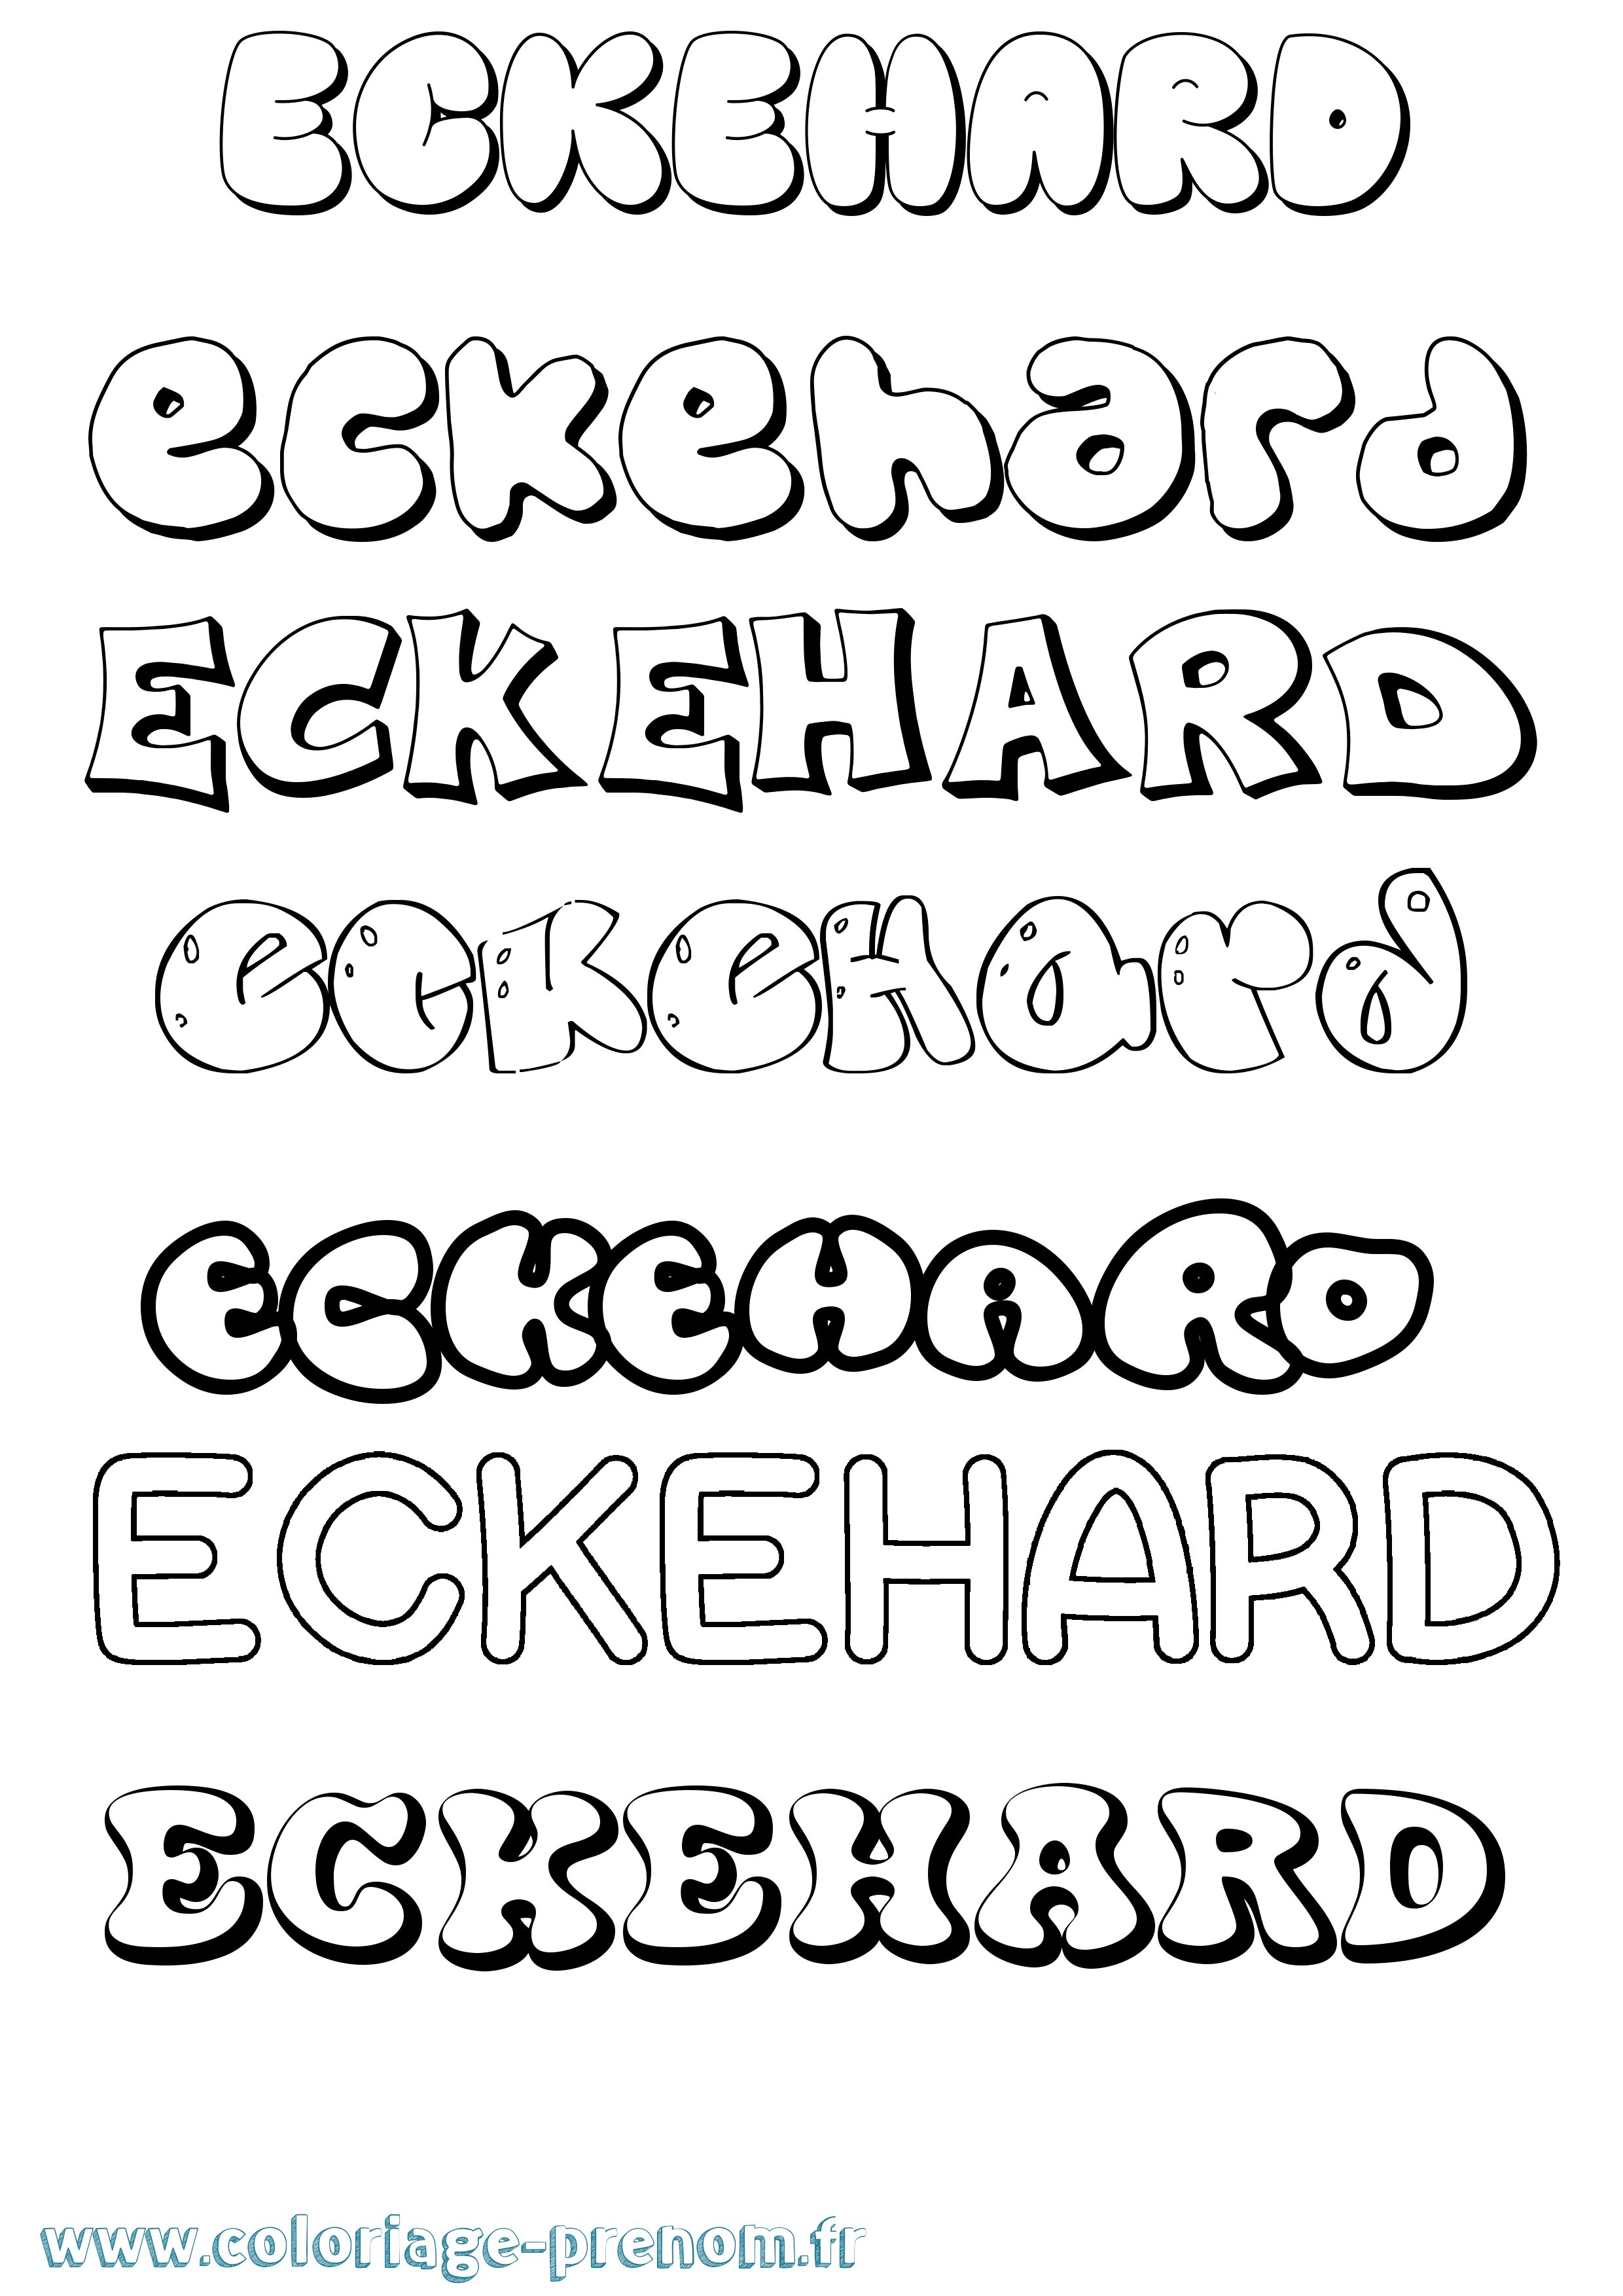 Coloriage prénom Eckehard Bubble